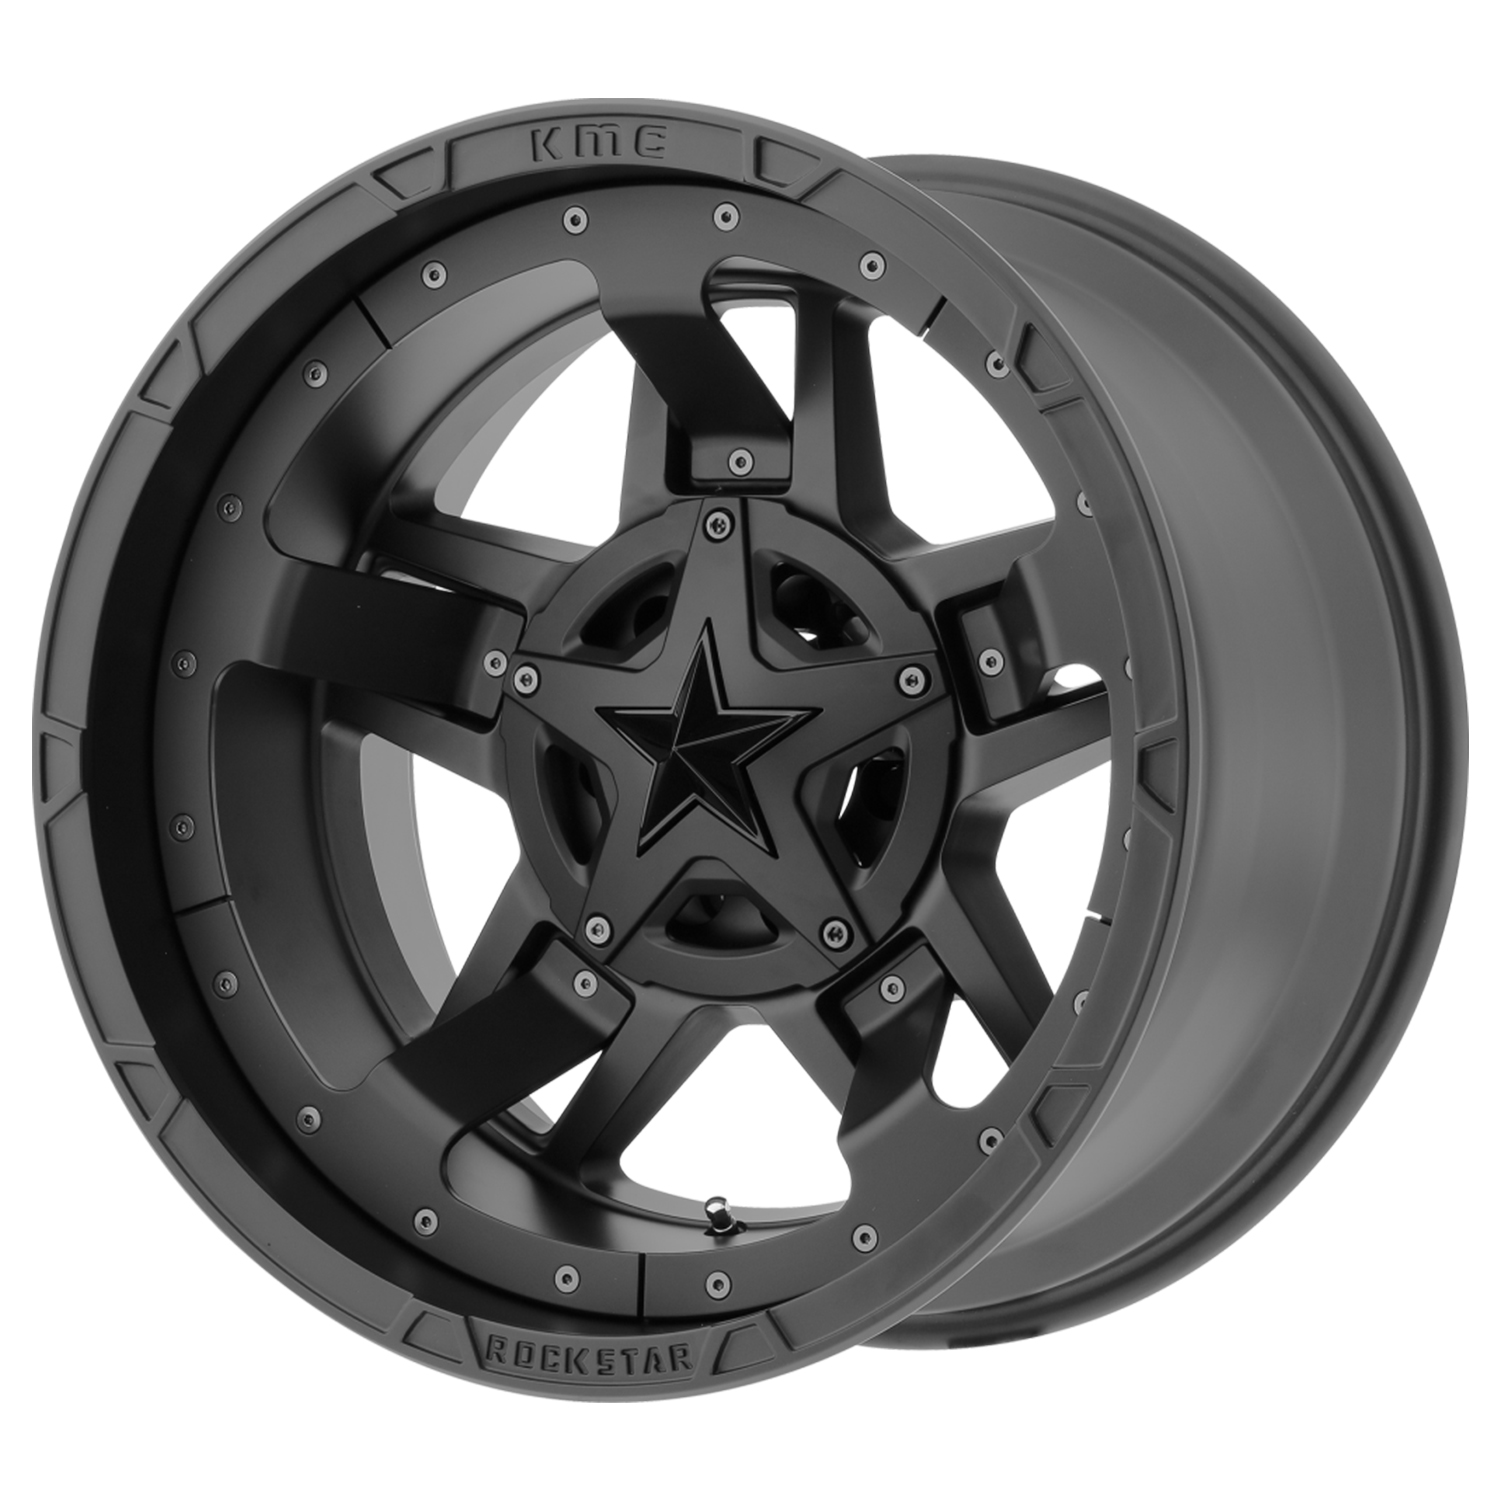 Xd Series Rs3 17x9 5x114.3/5x127 -12et Matte Black wheel